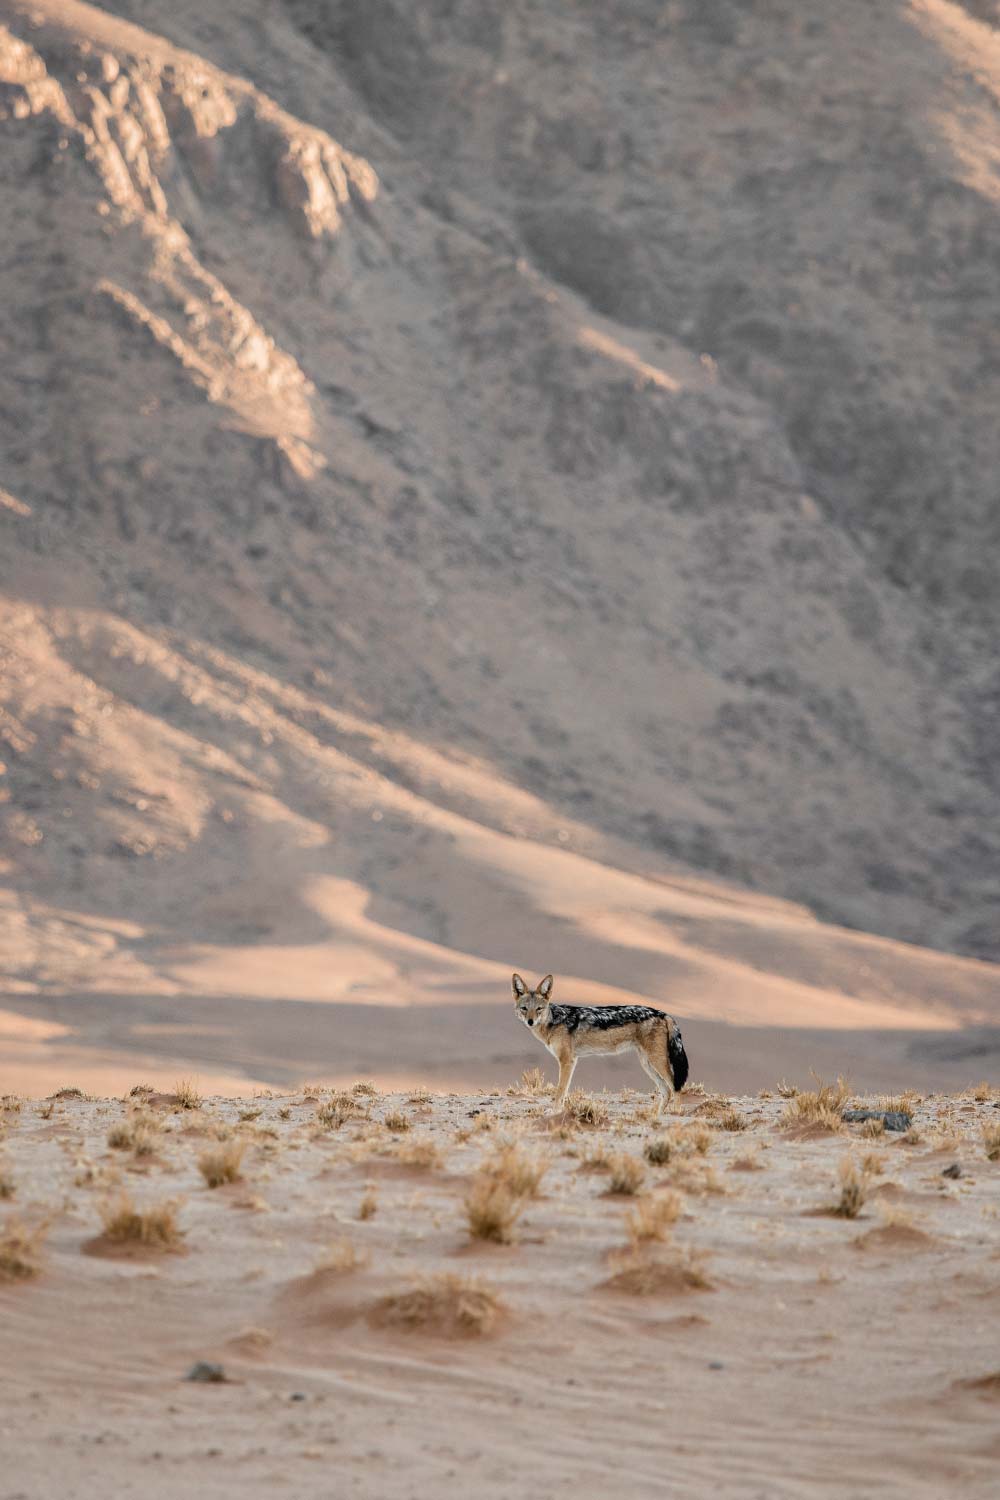 Rare desert foxes roam the Namib Desert plateau